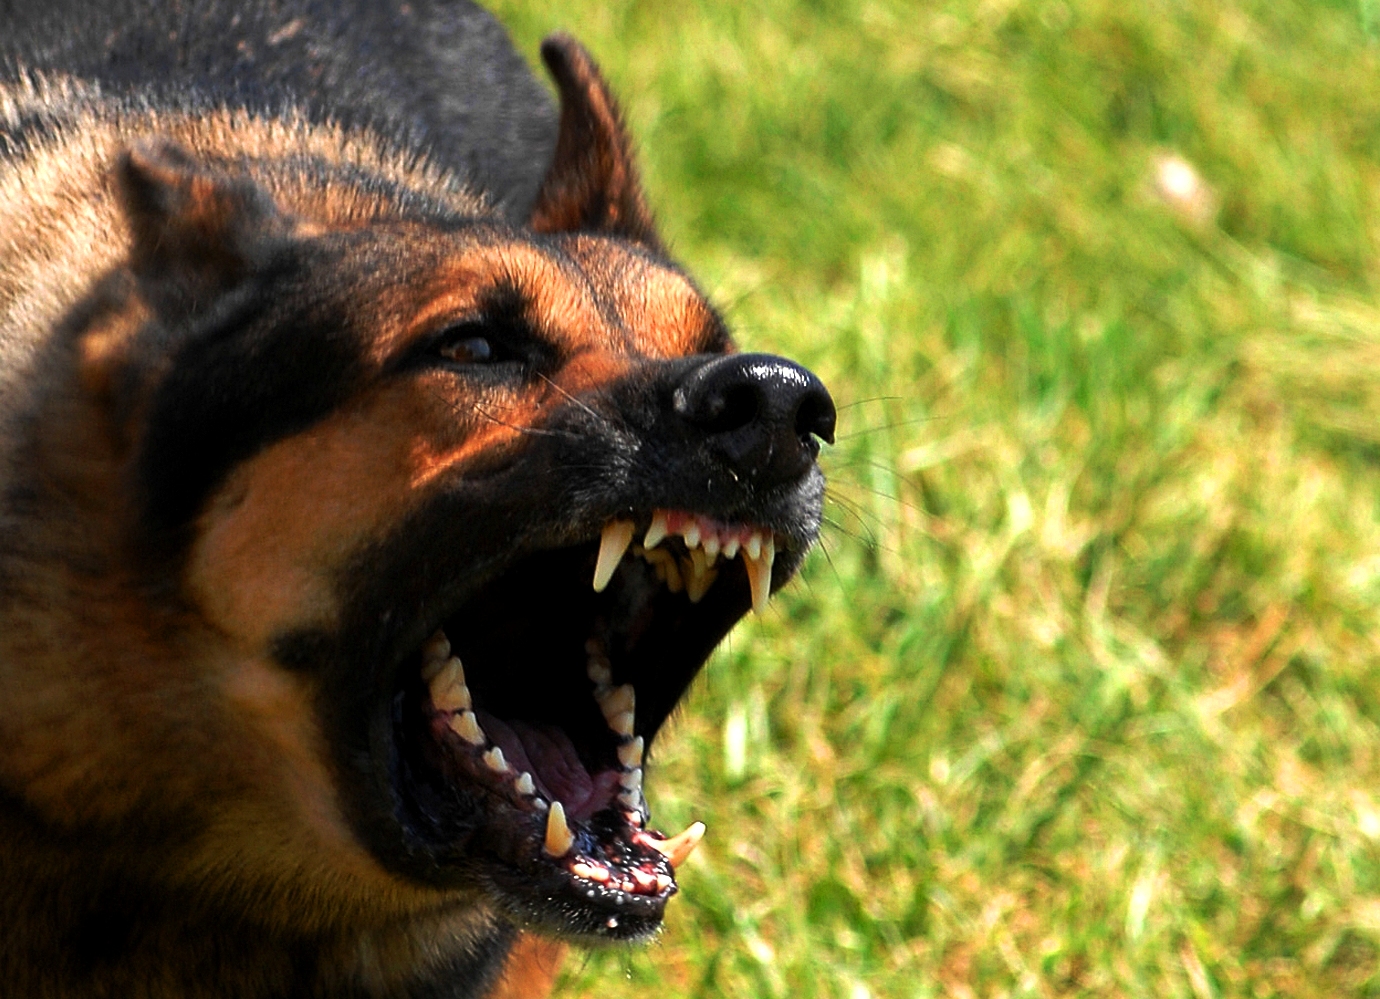 An aggressive German shepherd dog